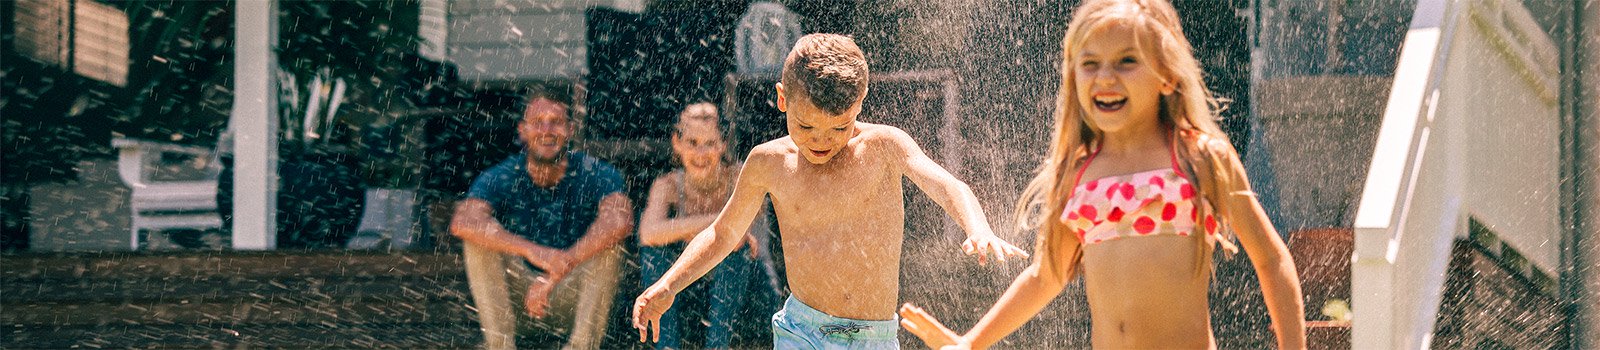 Children playing in a sprinkler